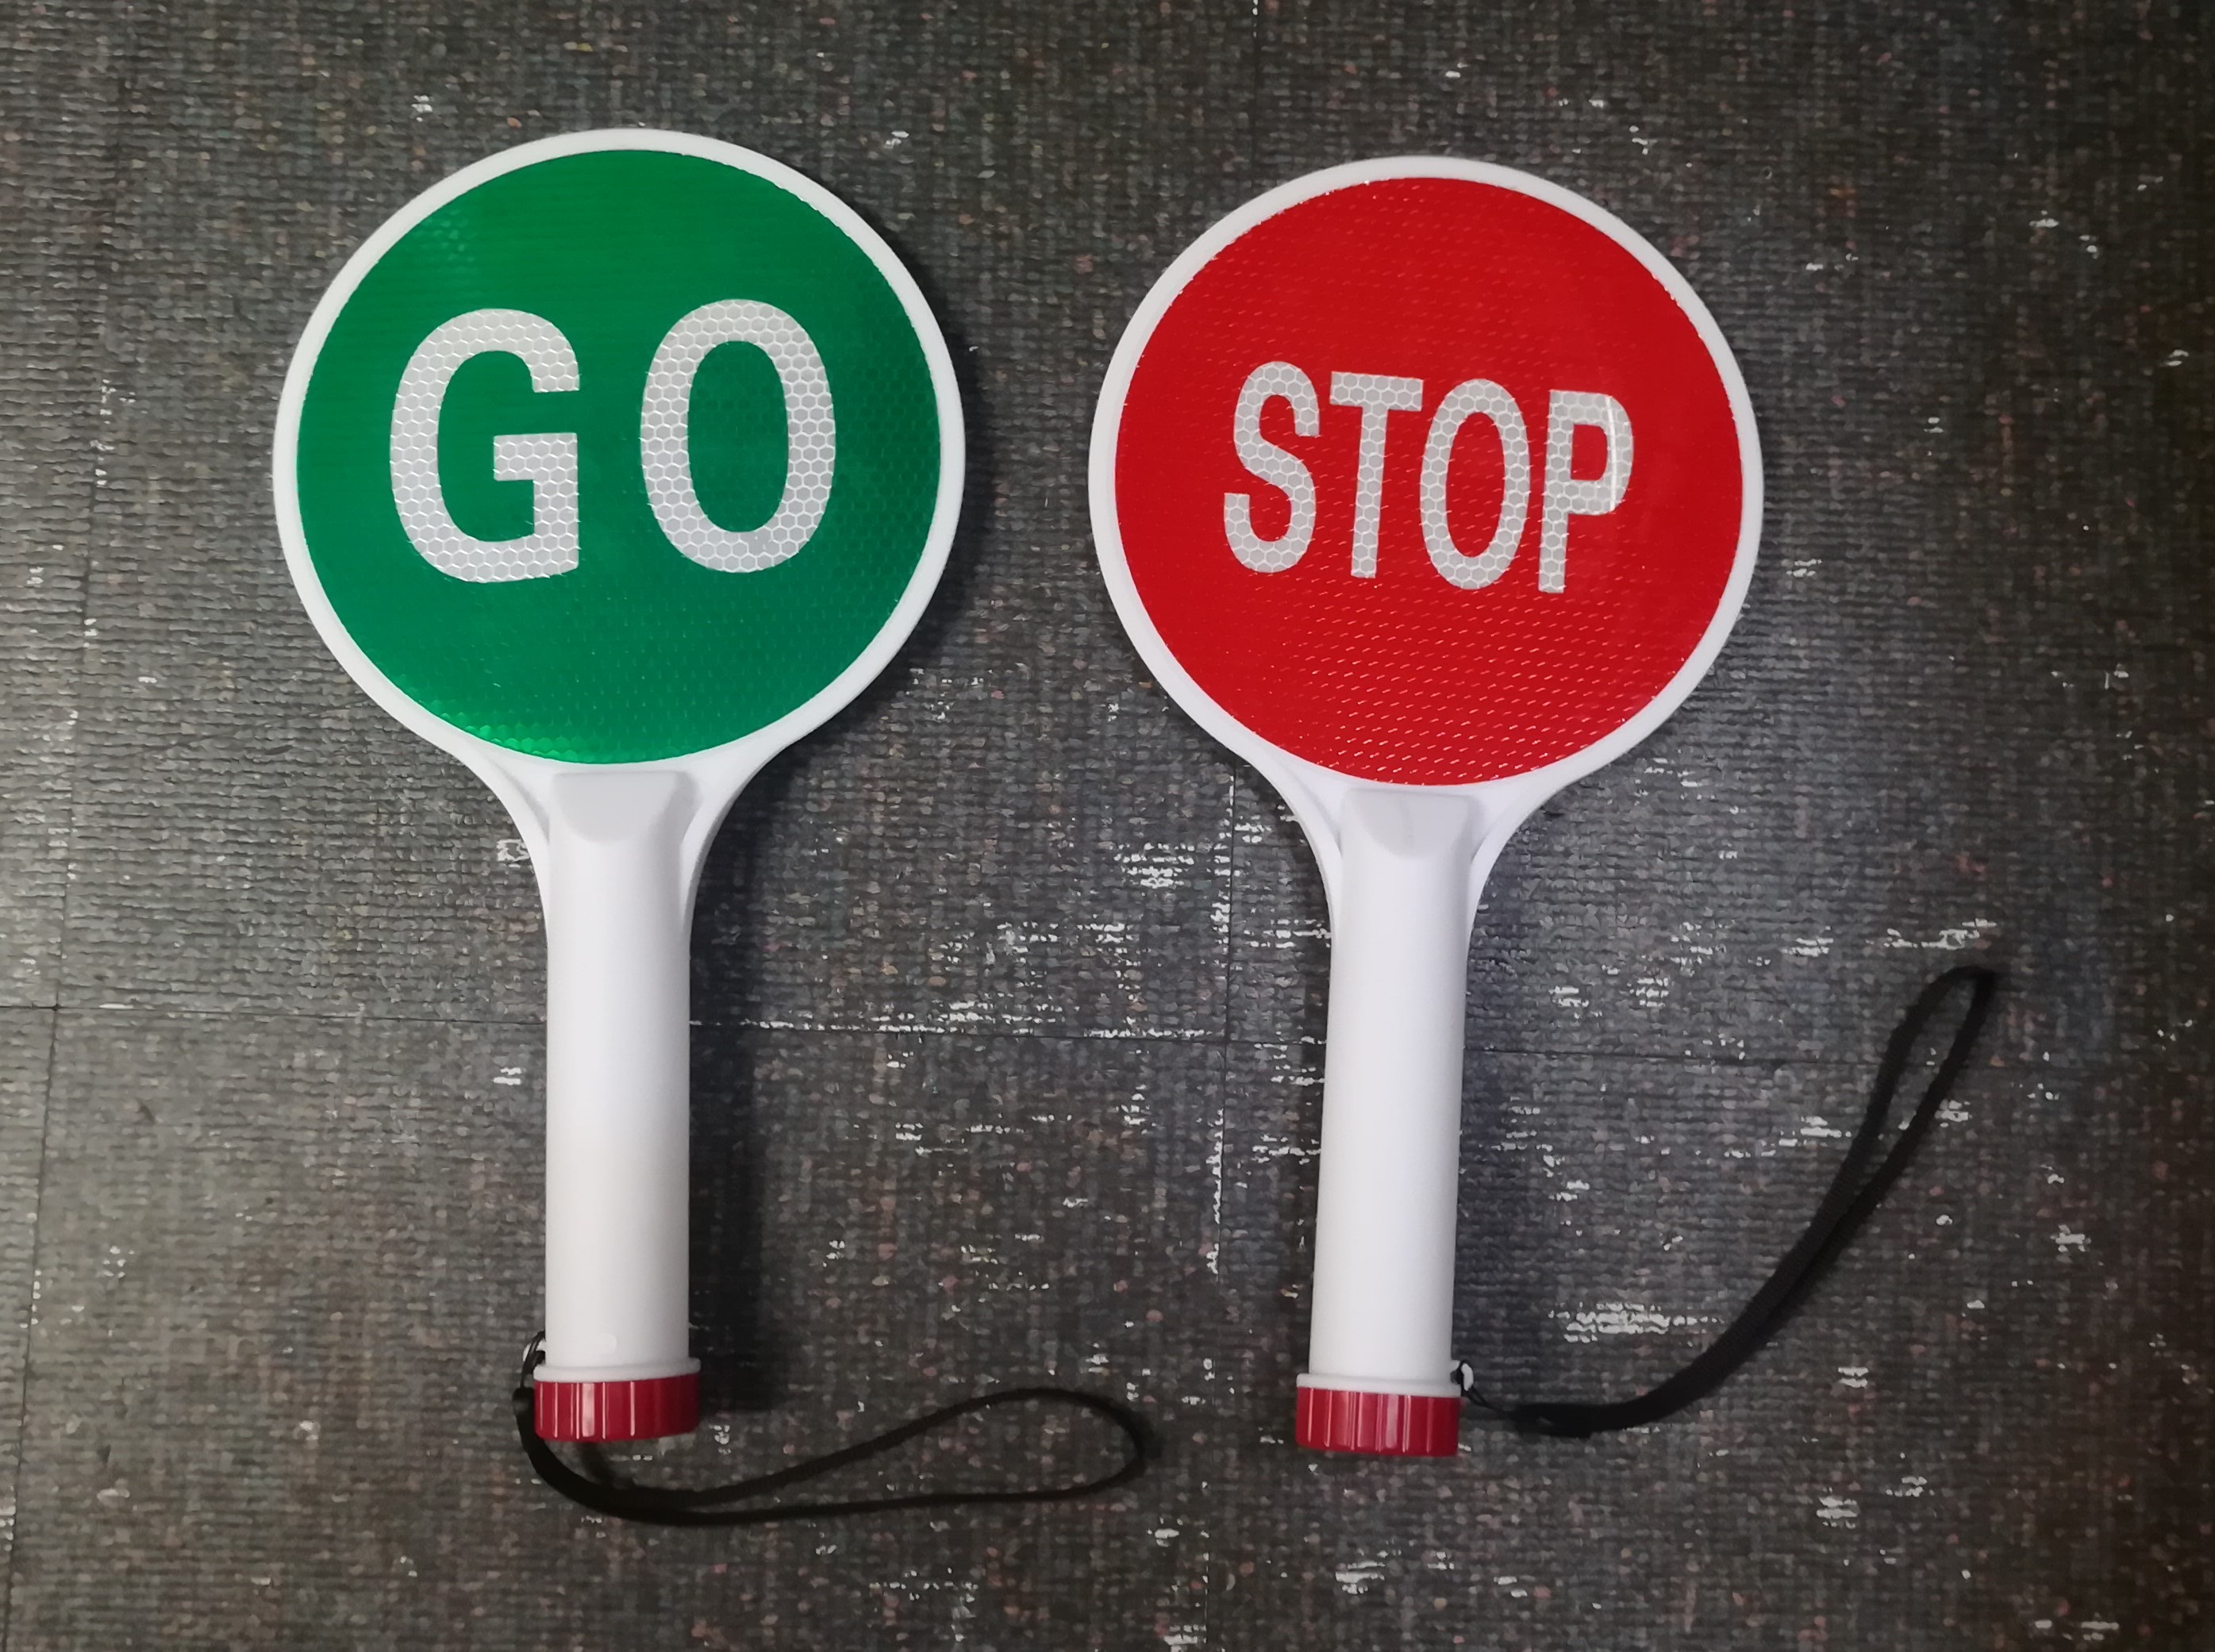 Stop & Go (Back to Back) Traffic Safety Handheld